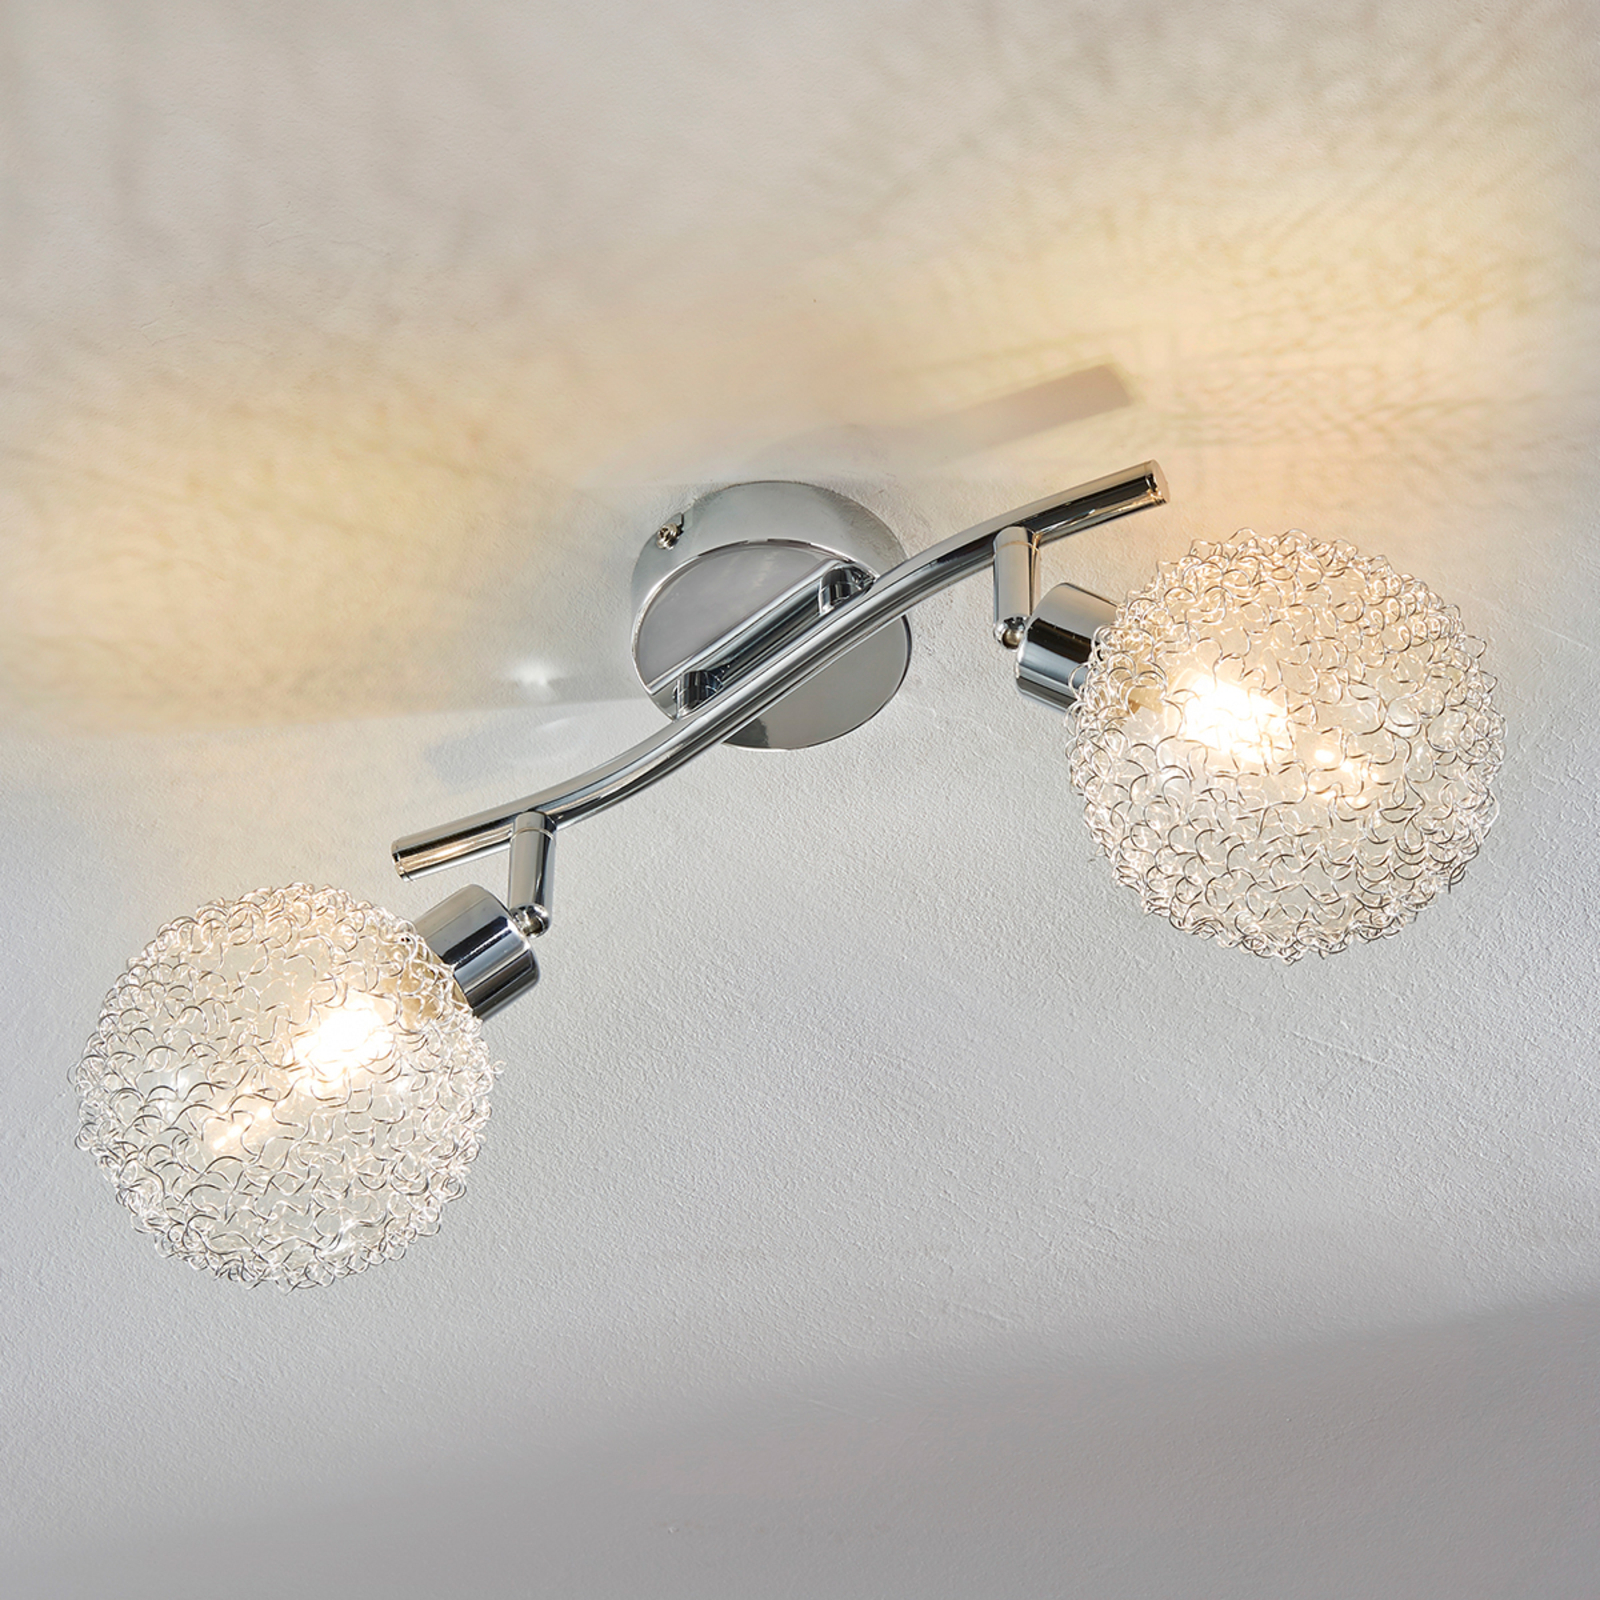 Ticino ceiling light, 2-bulb